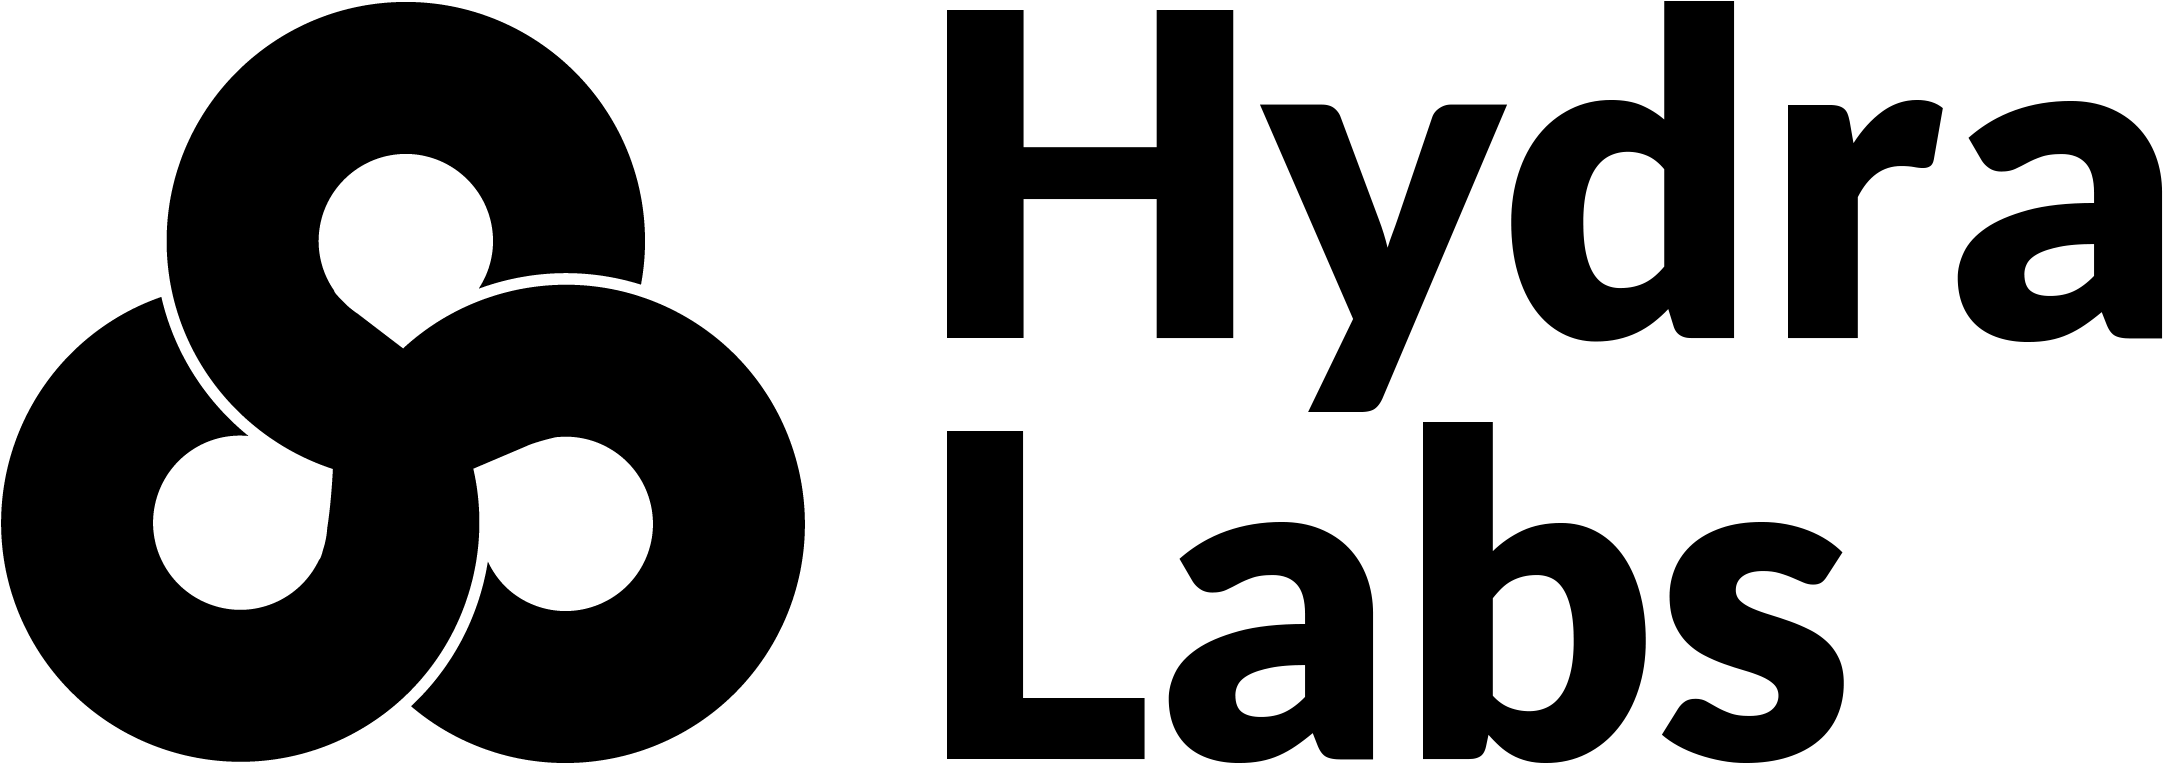 Marvel Hydra Logo PNG High-Quality Image